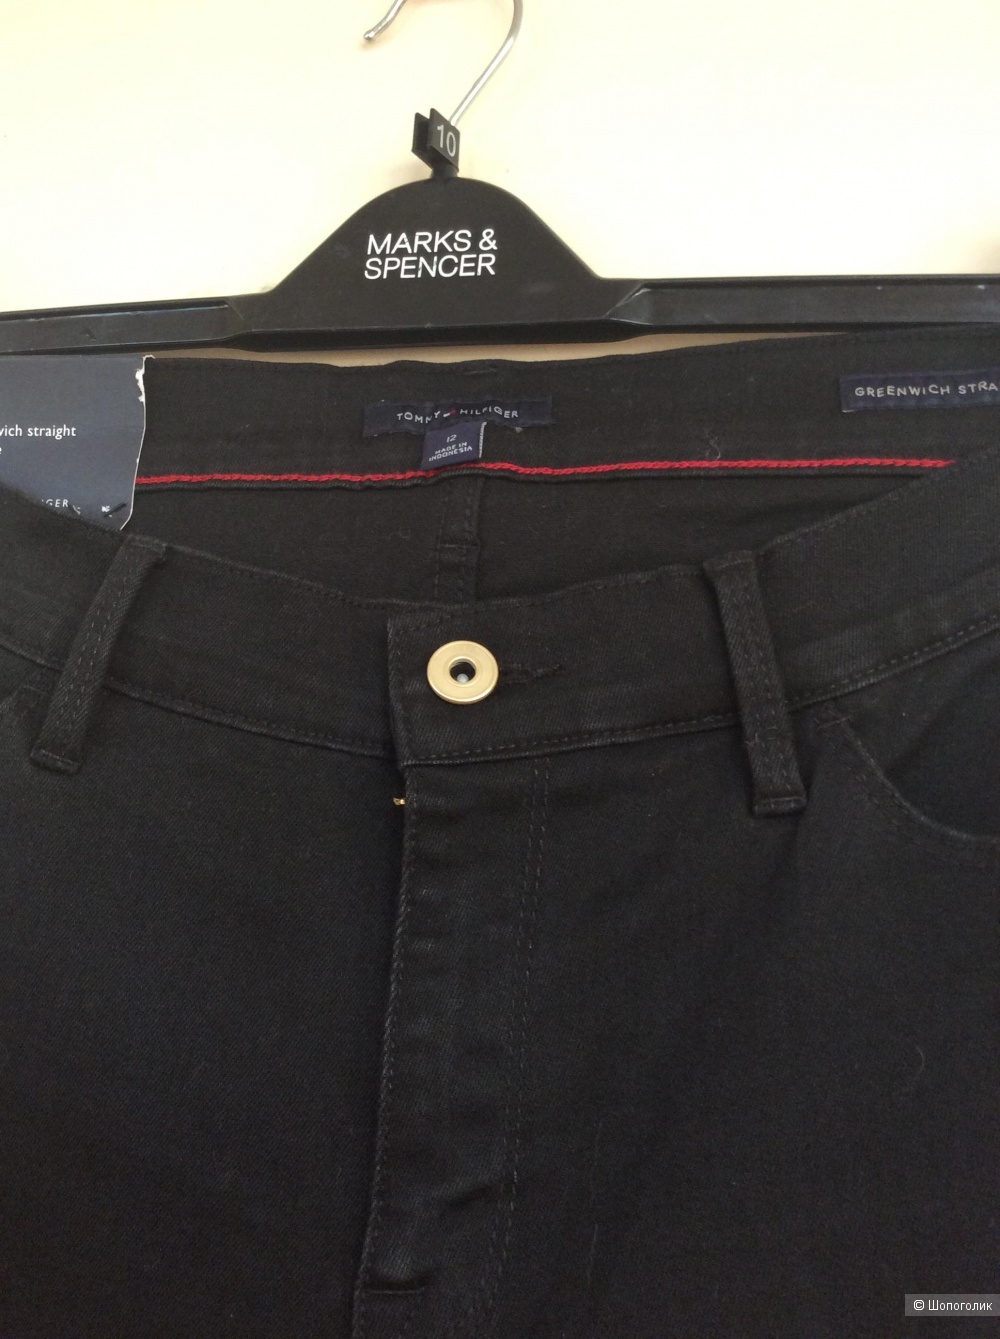 Tommy Hilfiger джинсы размер 12 (рос 50)